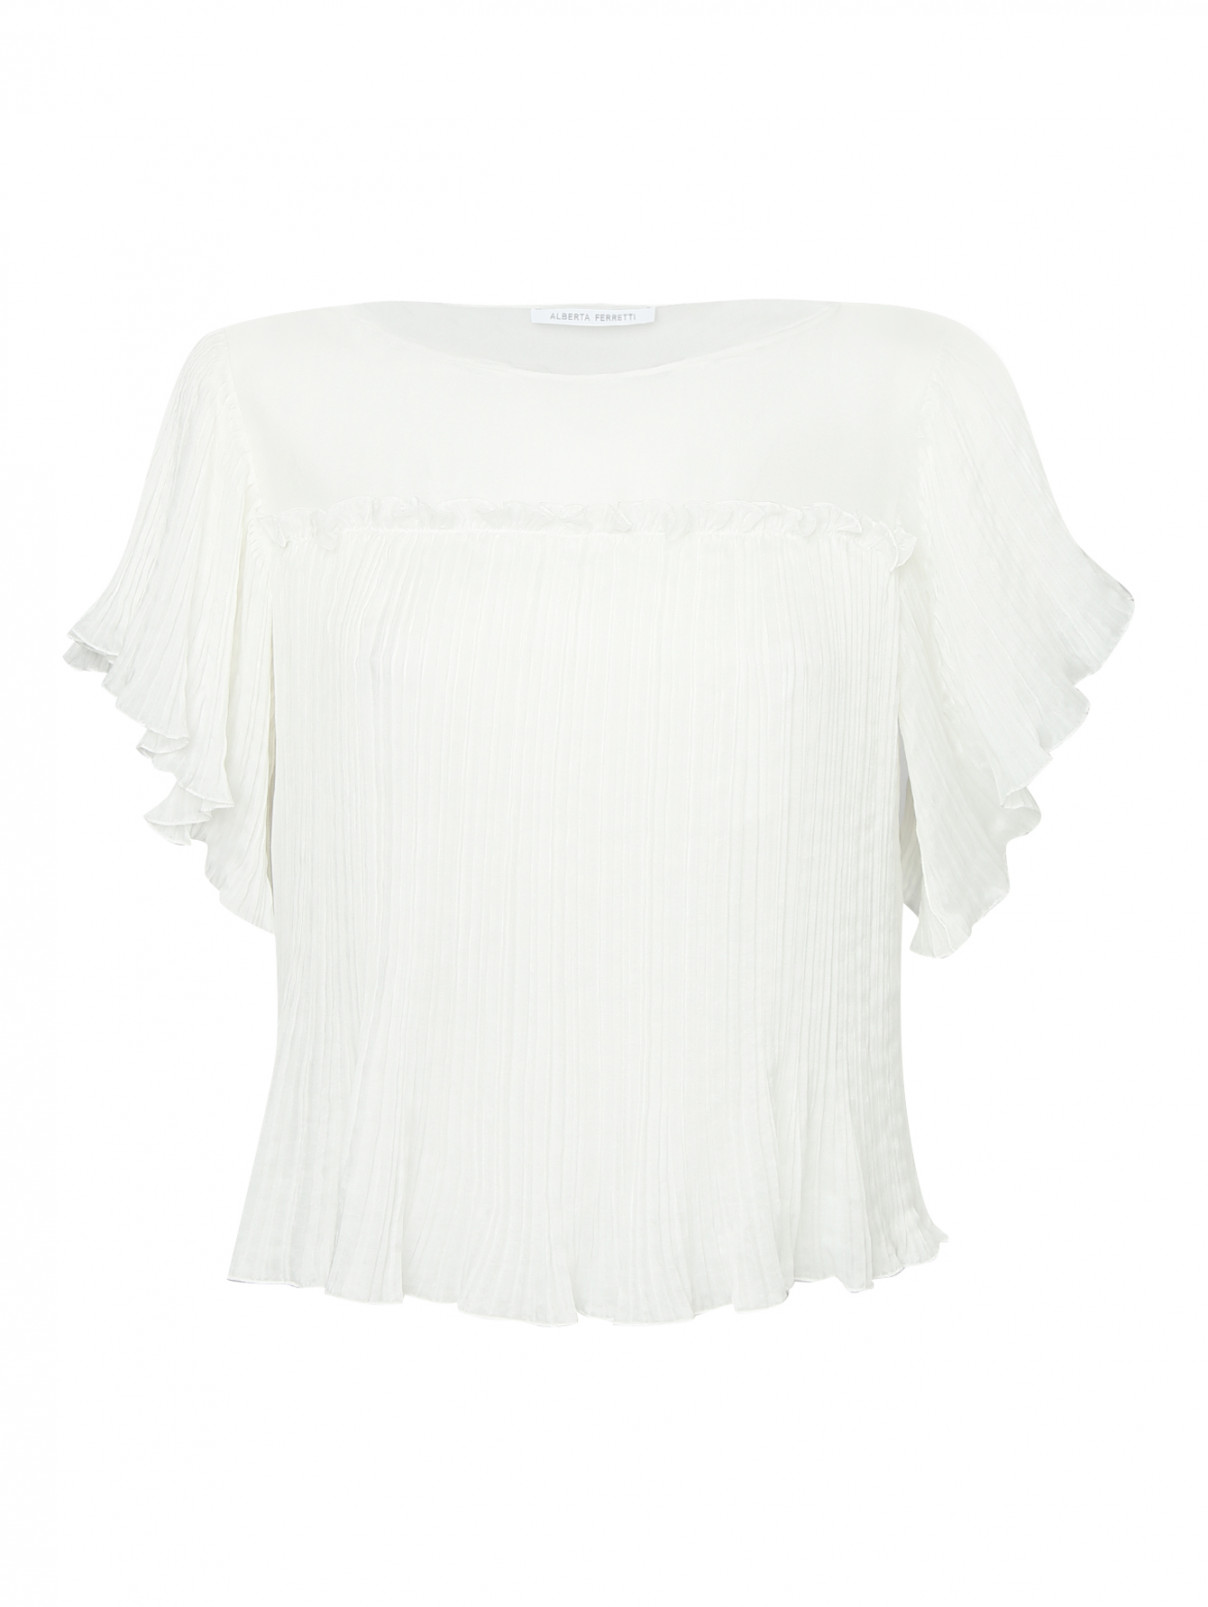 Блуза из шелка с коротким рукавом Alberta Ferretti  –  Общий вид  – Цвет:  Белый